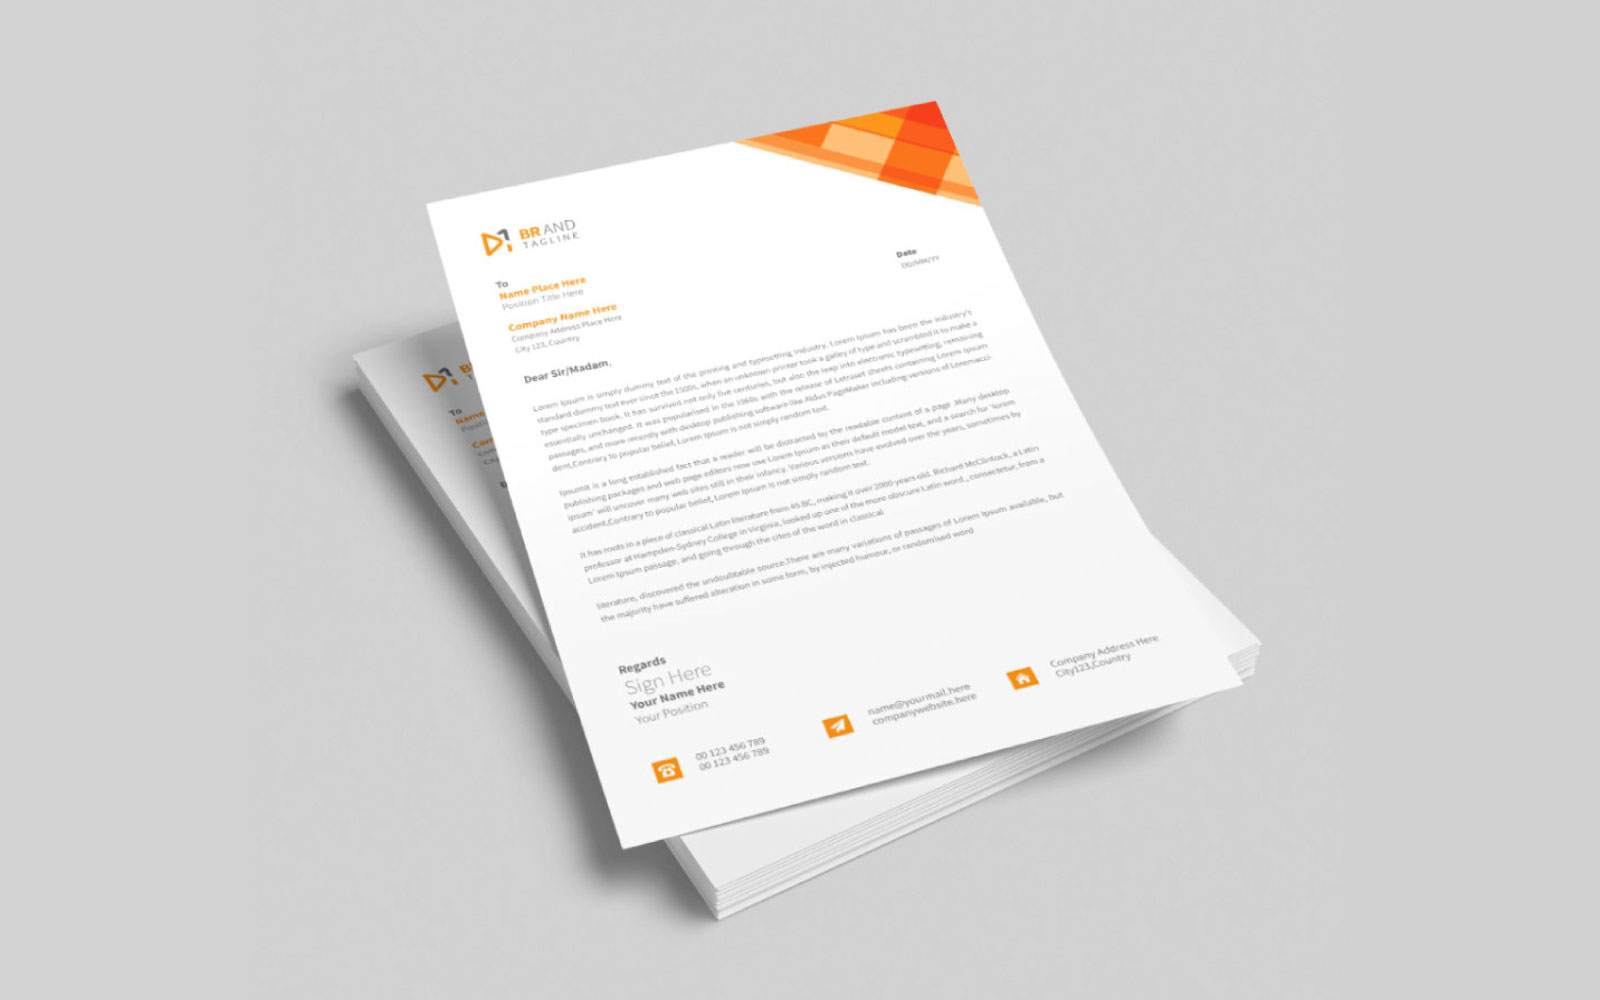 Modern and minimal business letterhead design